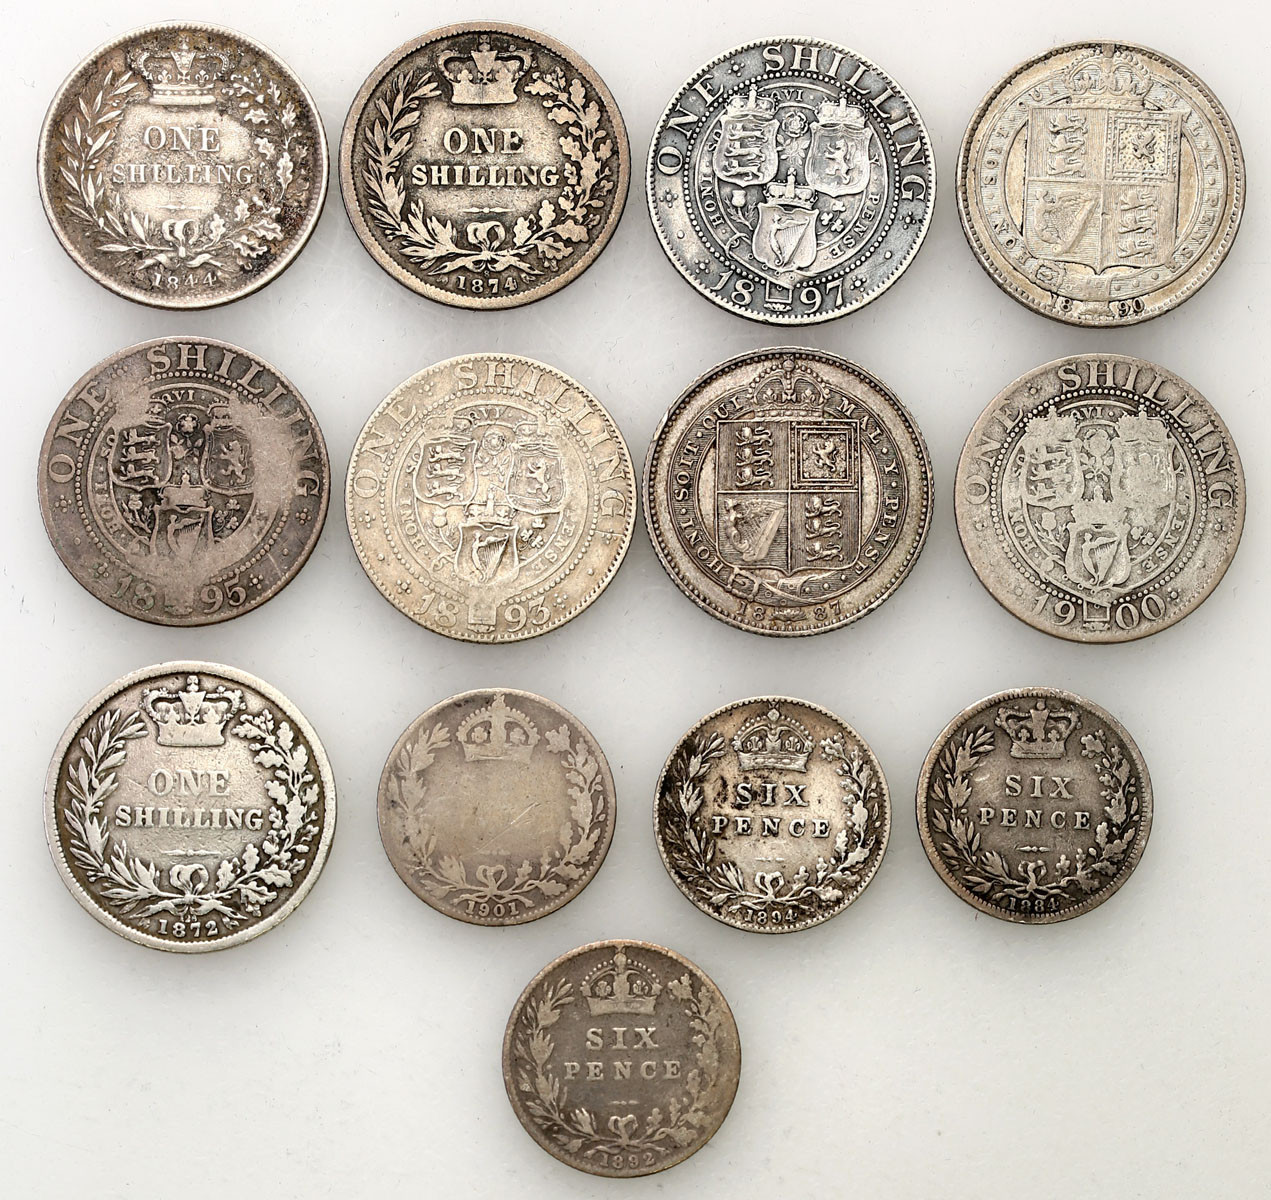 Wielka Brytania. Wiktoria (1837-1901). 6 pence, shilling 1844-1901, zestaw 13 monet